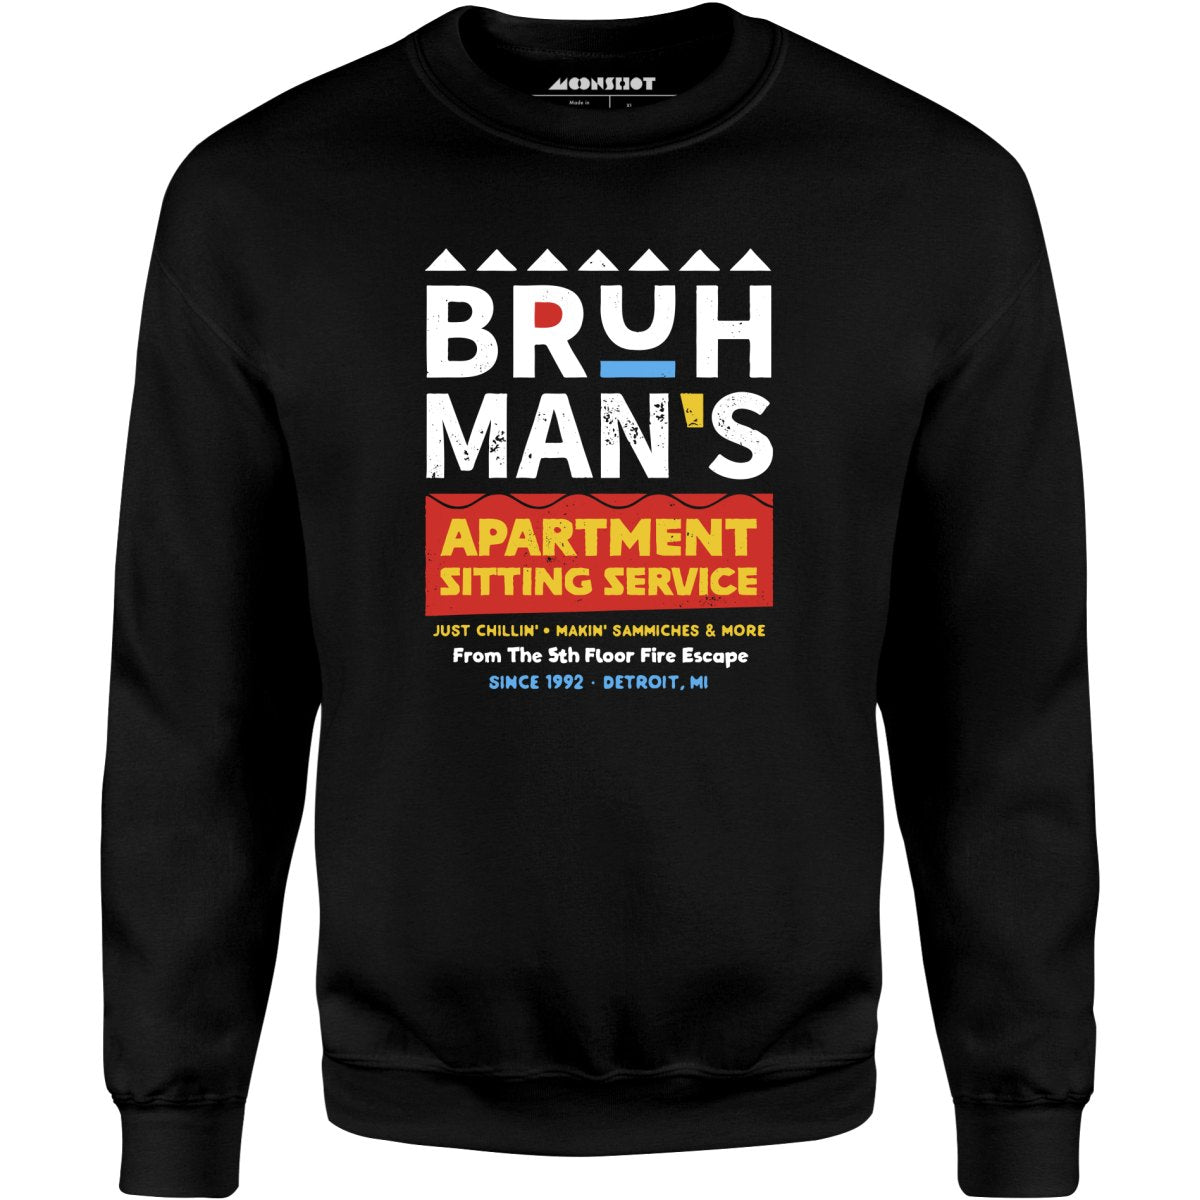 Bruh Man's Apartment Sitting Service - Unisex Sweatshirt